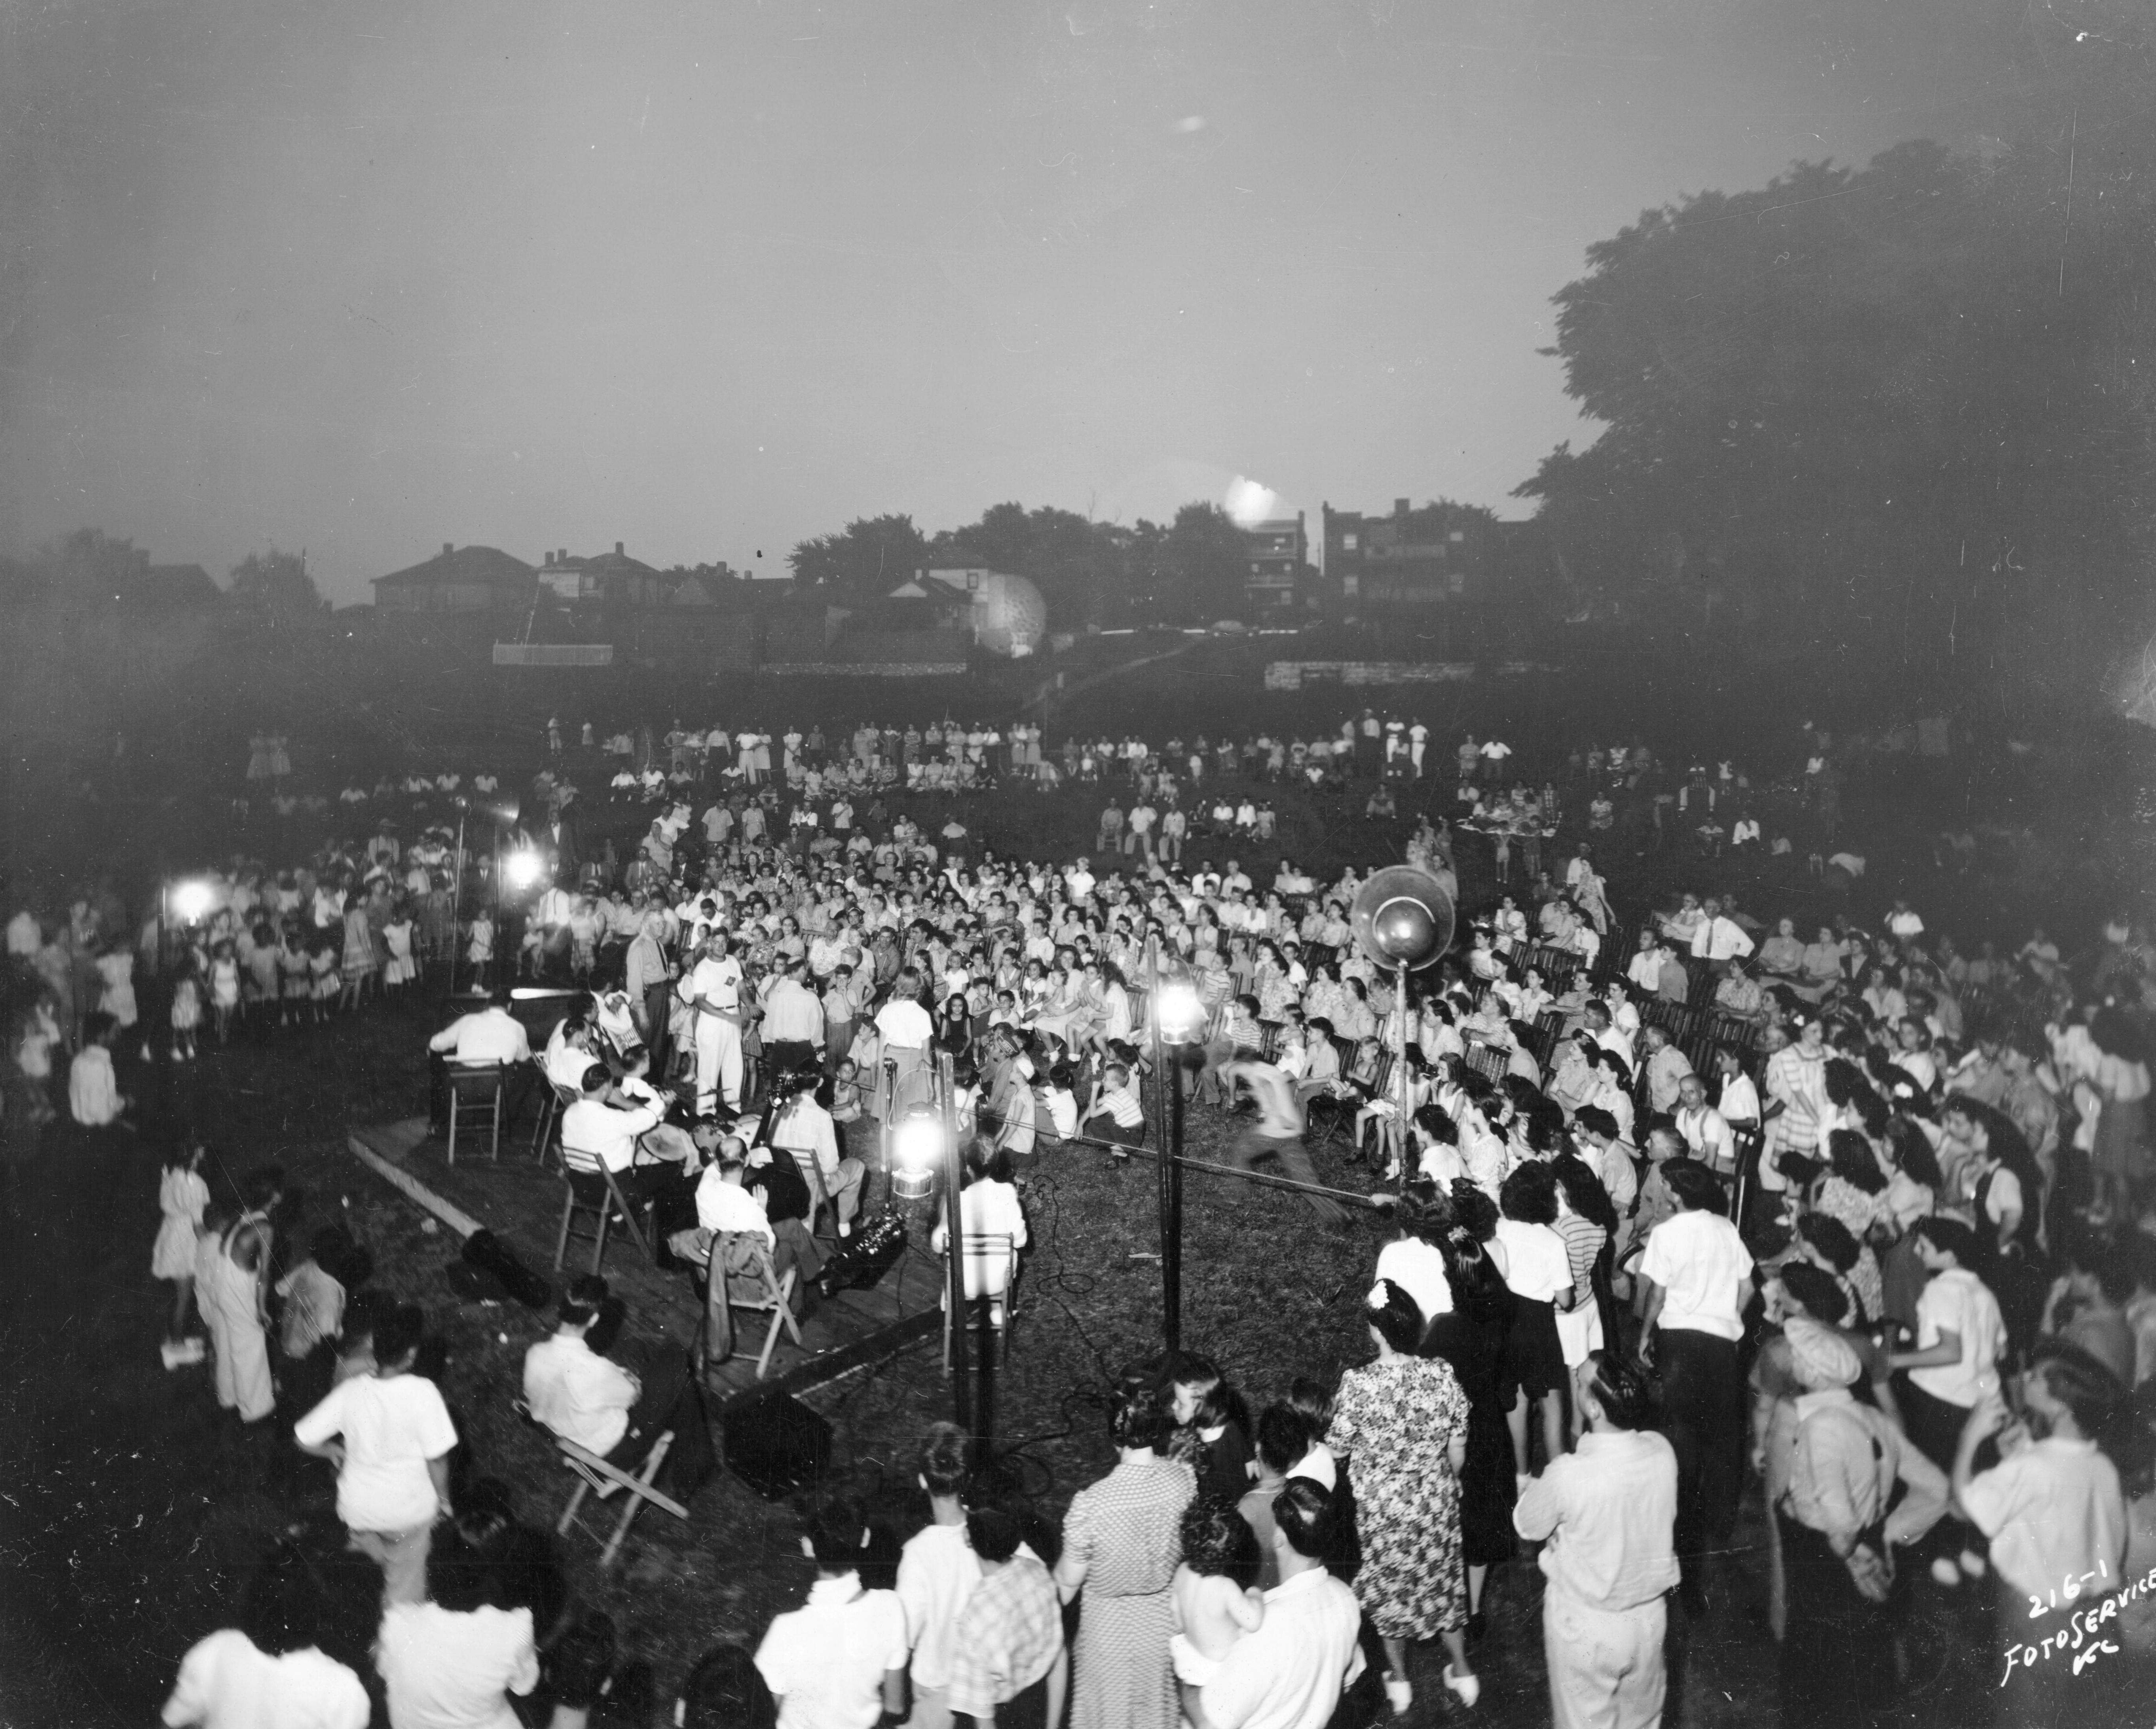 Belvidere Park opening dedication in 1944.